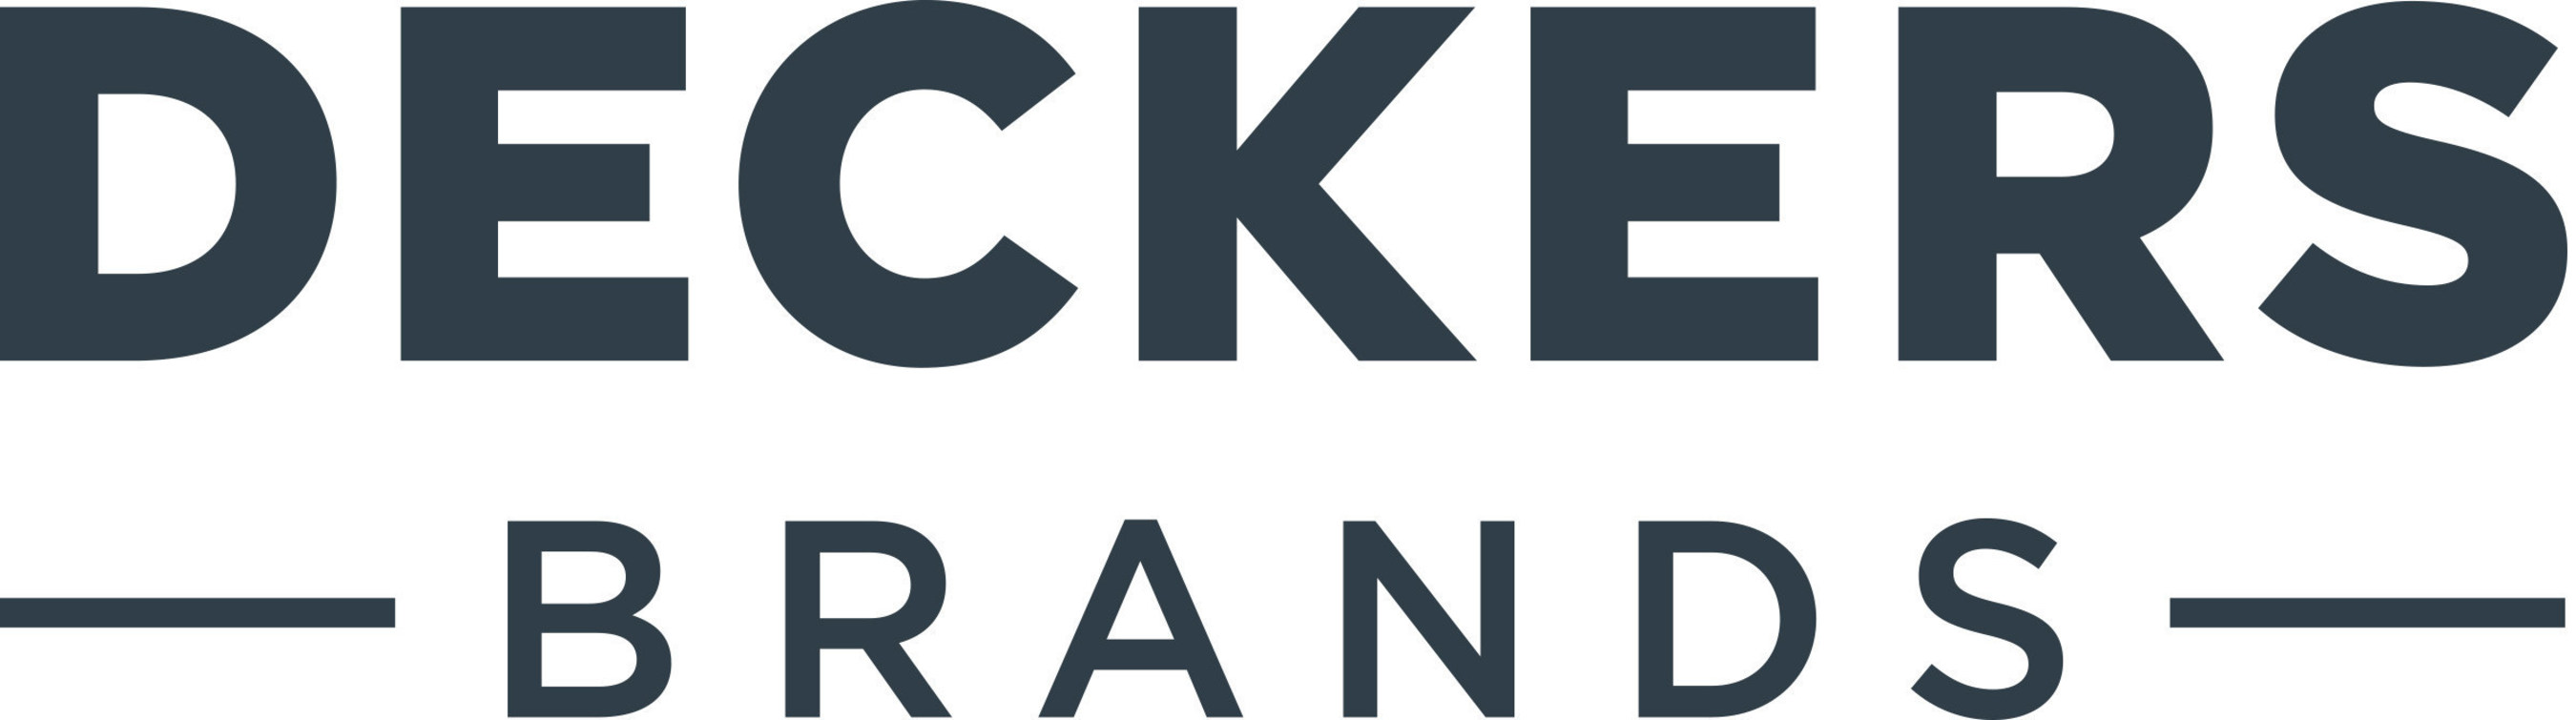 Deckers Brands logo.